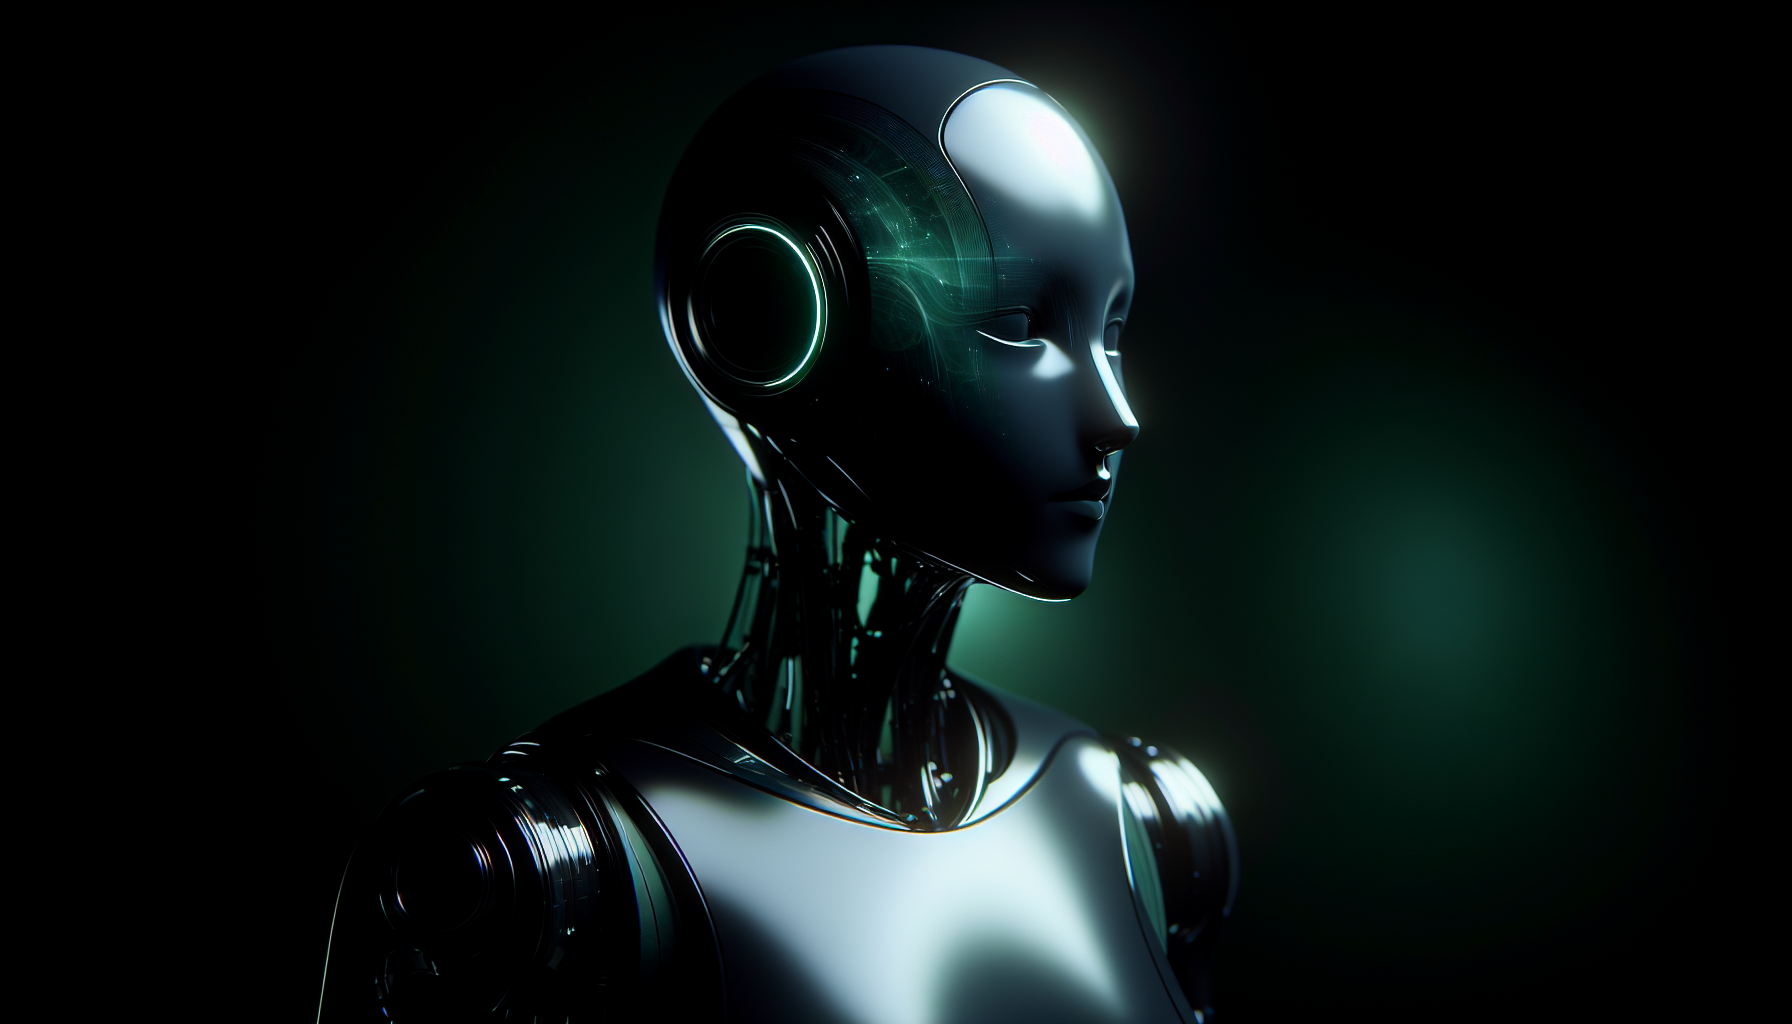 Futuristic AI robot working on a digital marketing campaign